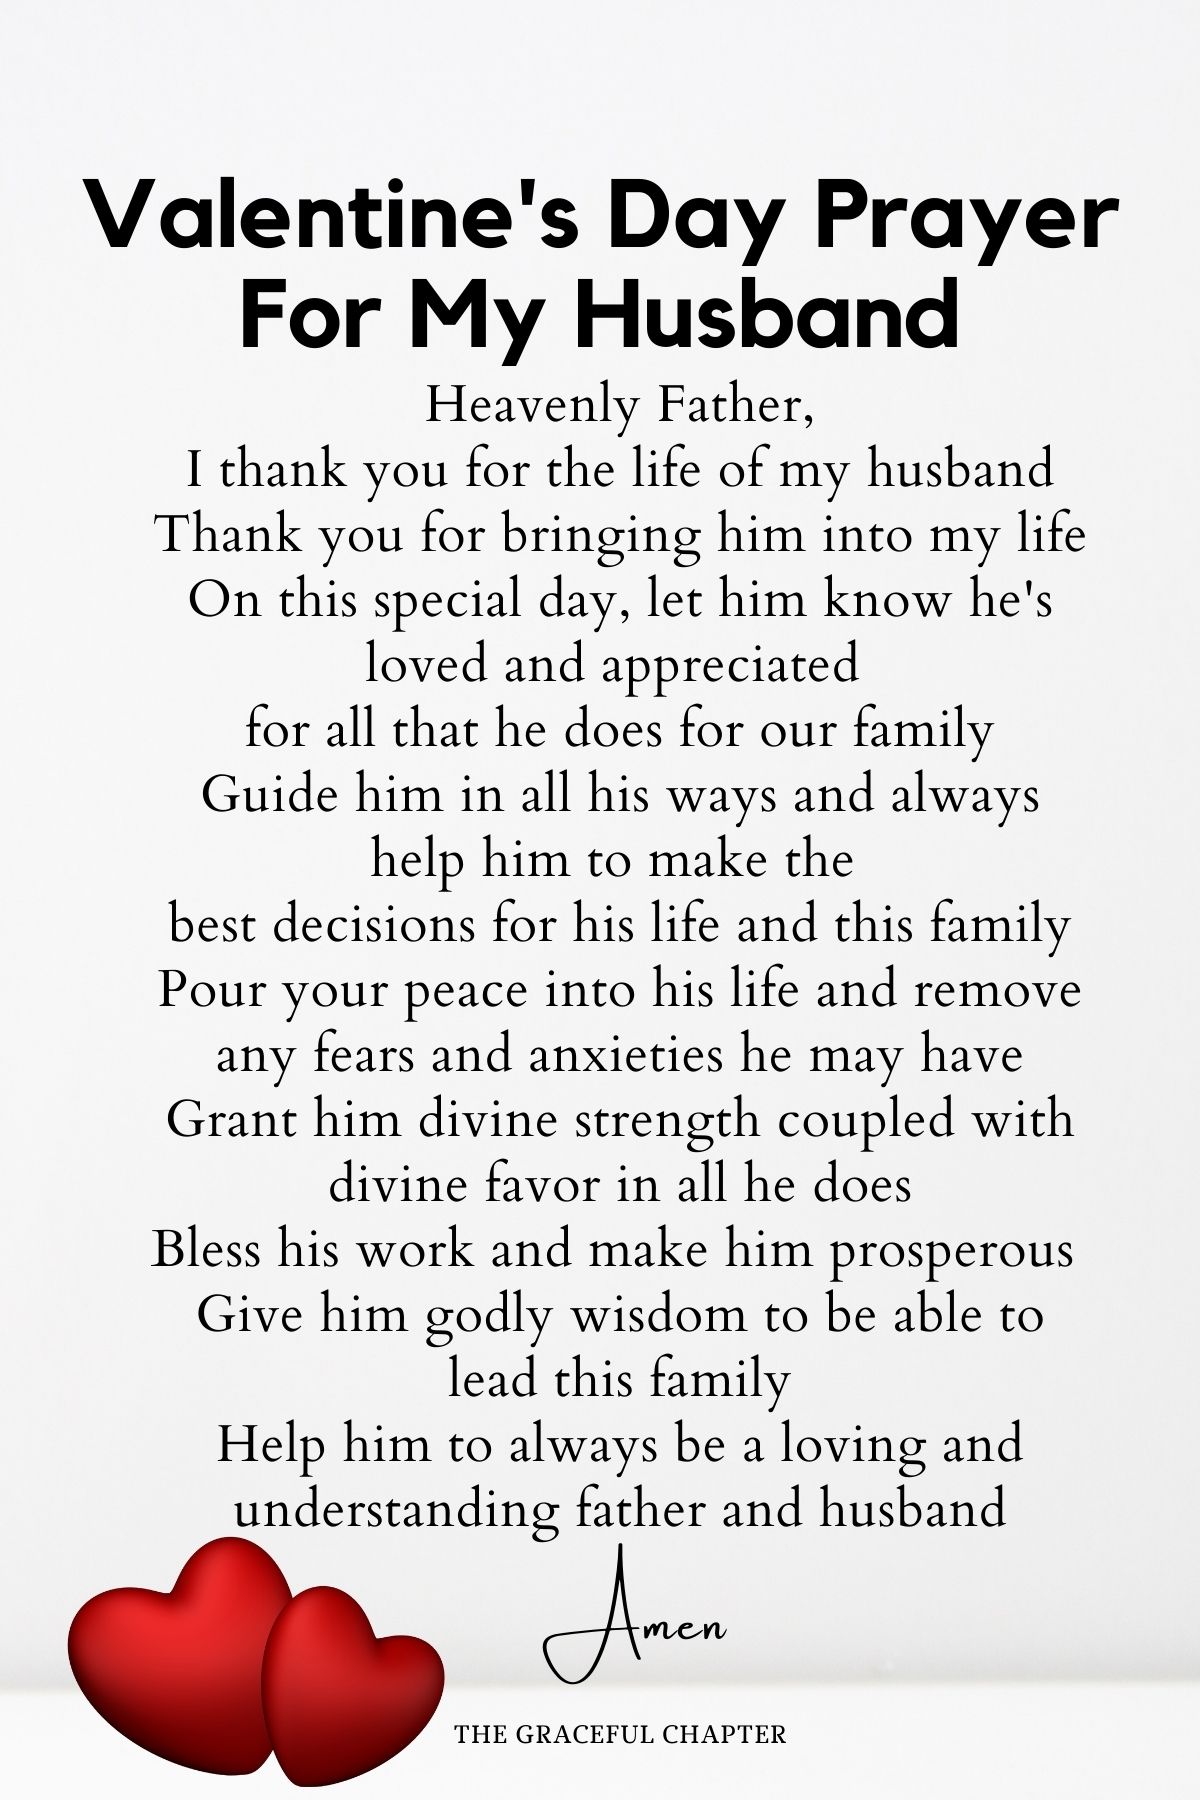 Valentine's day prayer for my husband